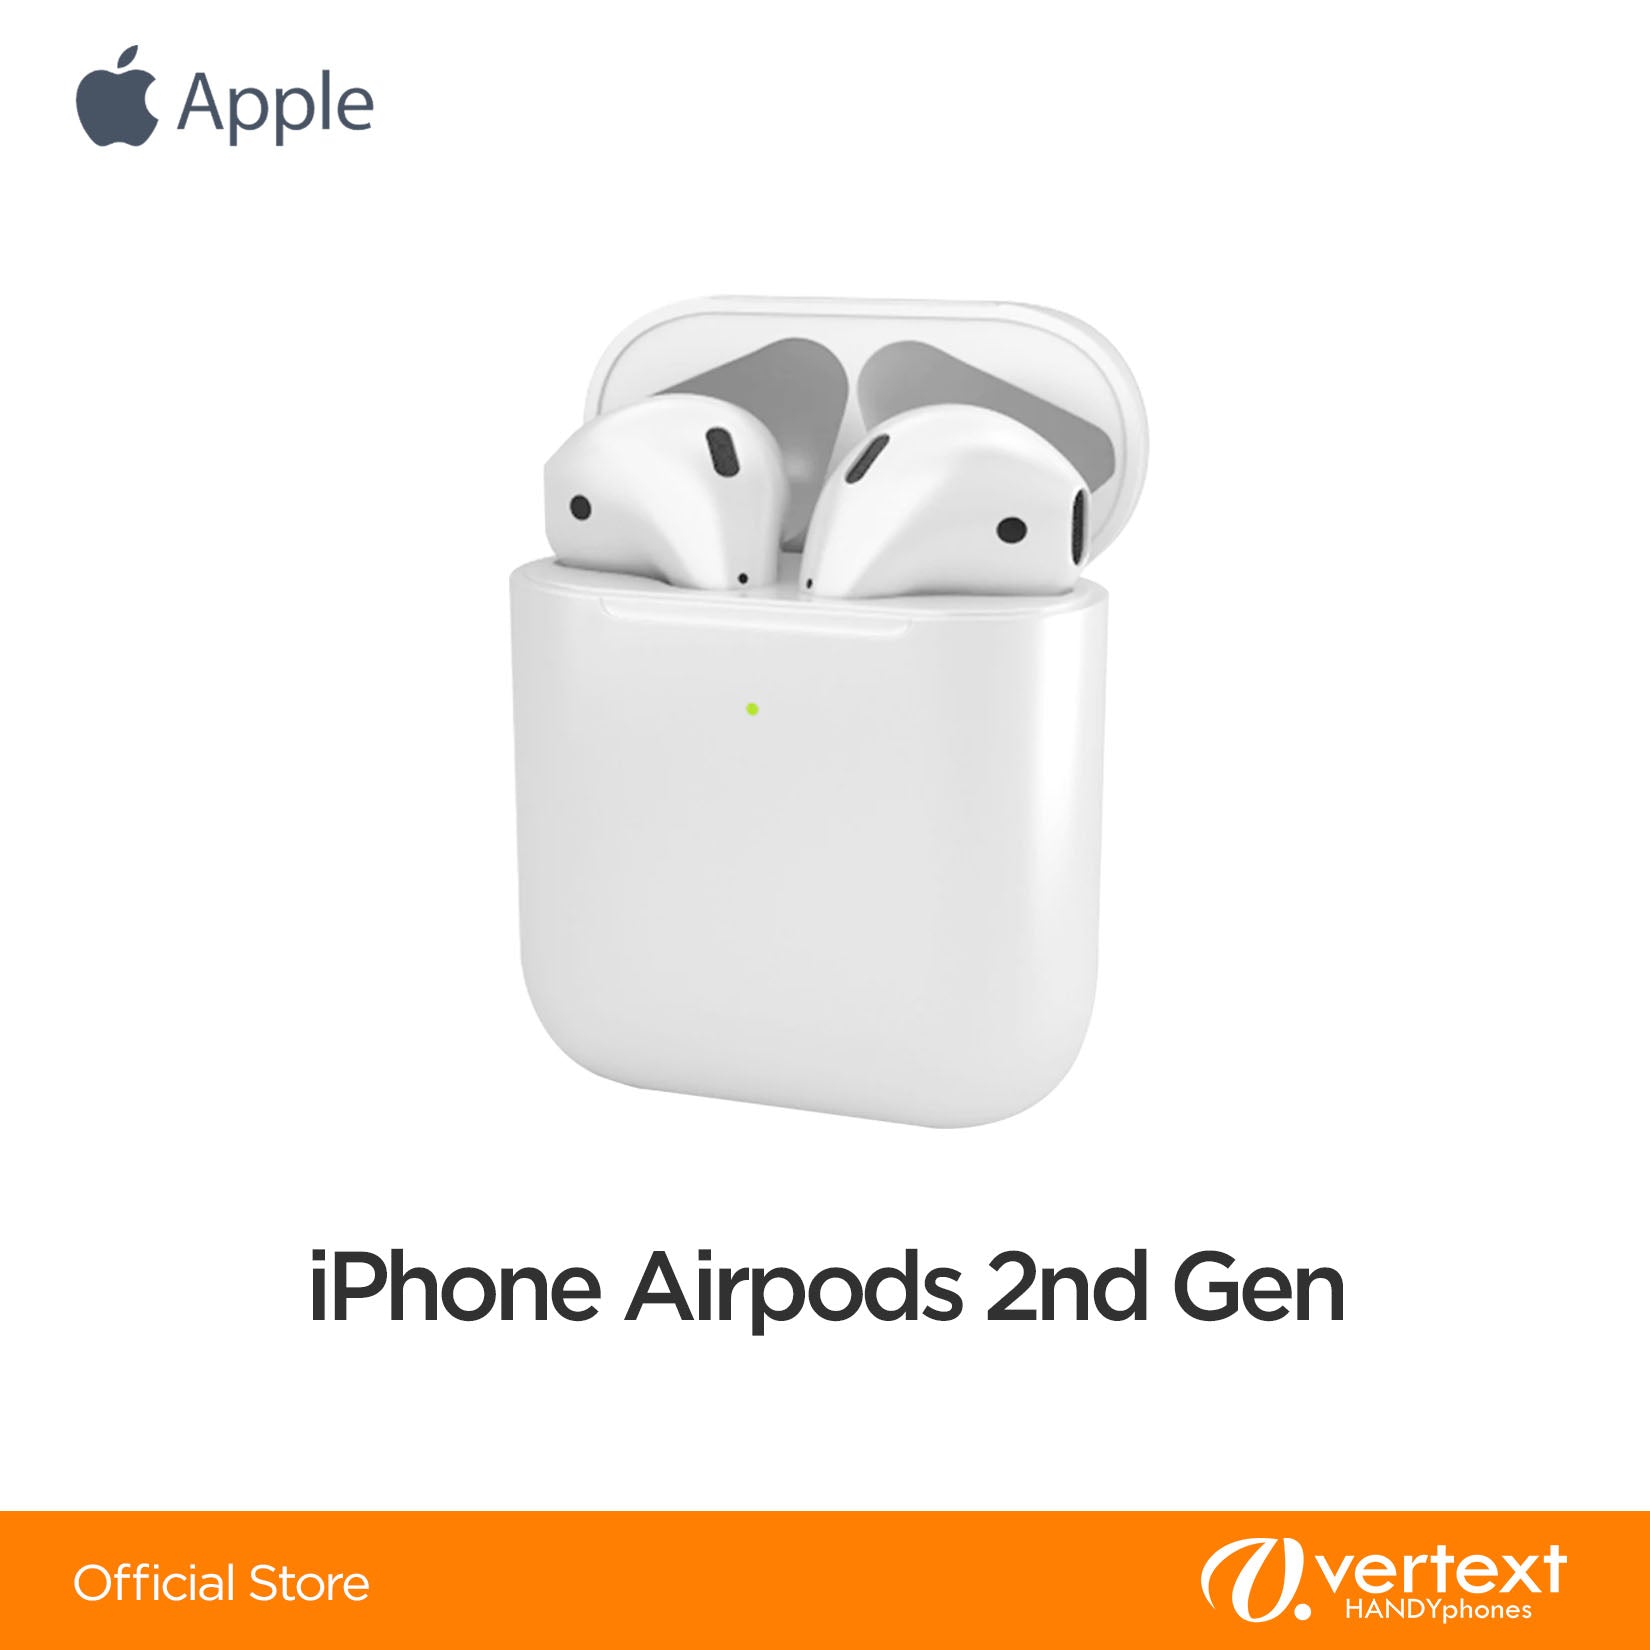 Apple Airpods 2nd GEN.